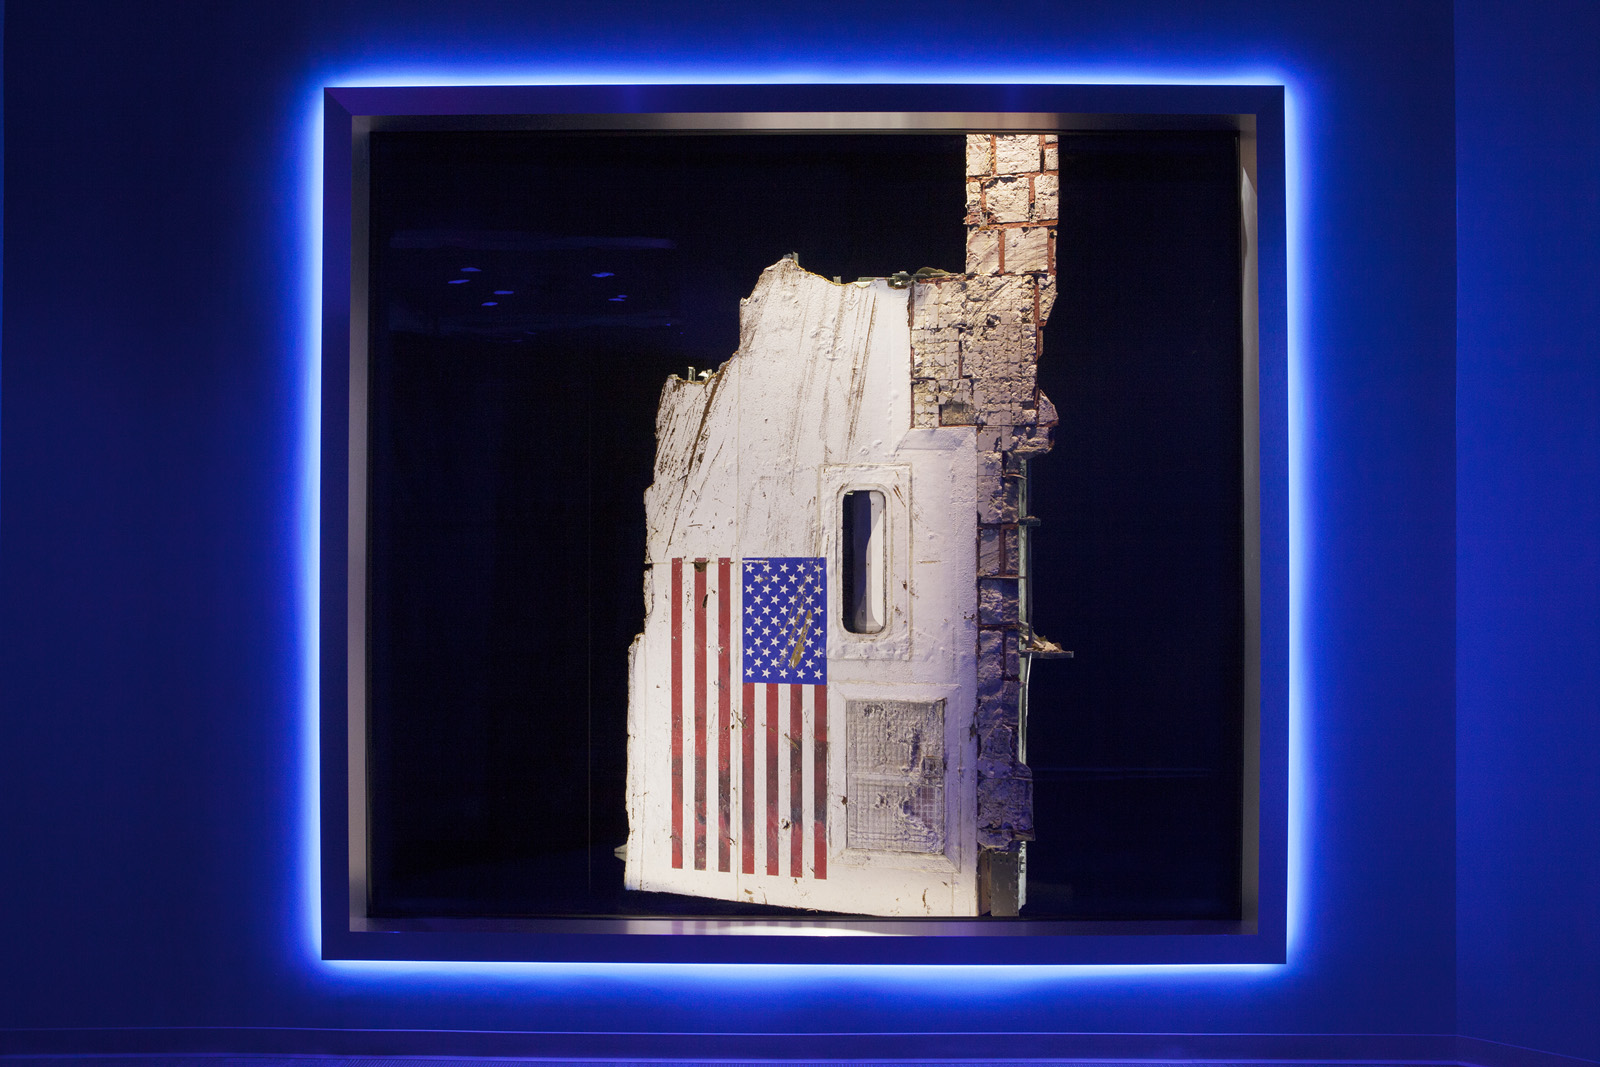 Space Shuttle Wreckage Fills This Heartbreaking NASA Exhibit